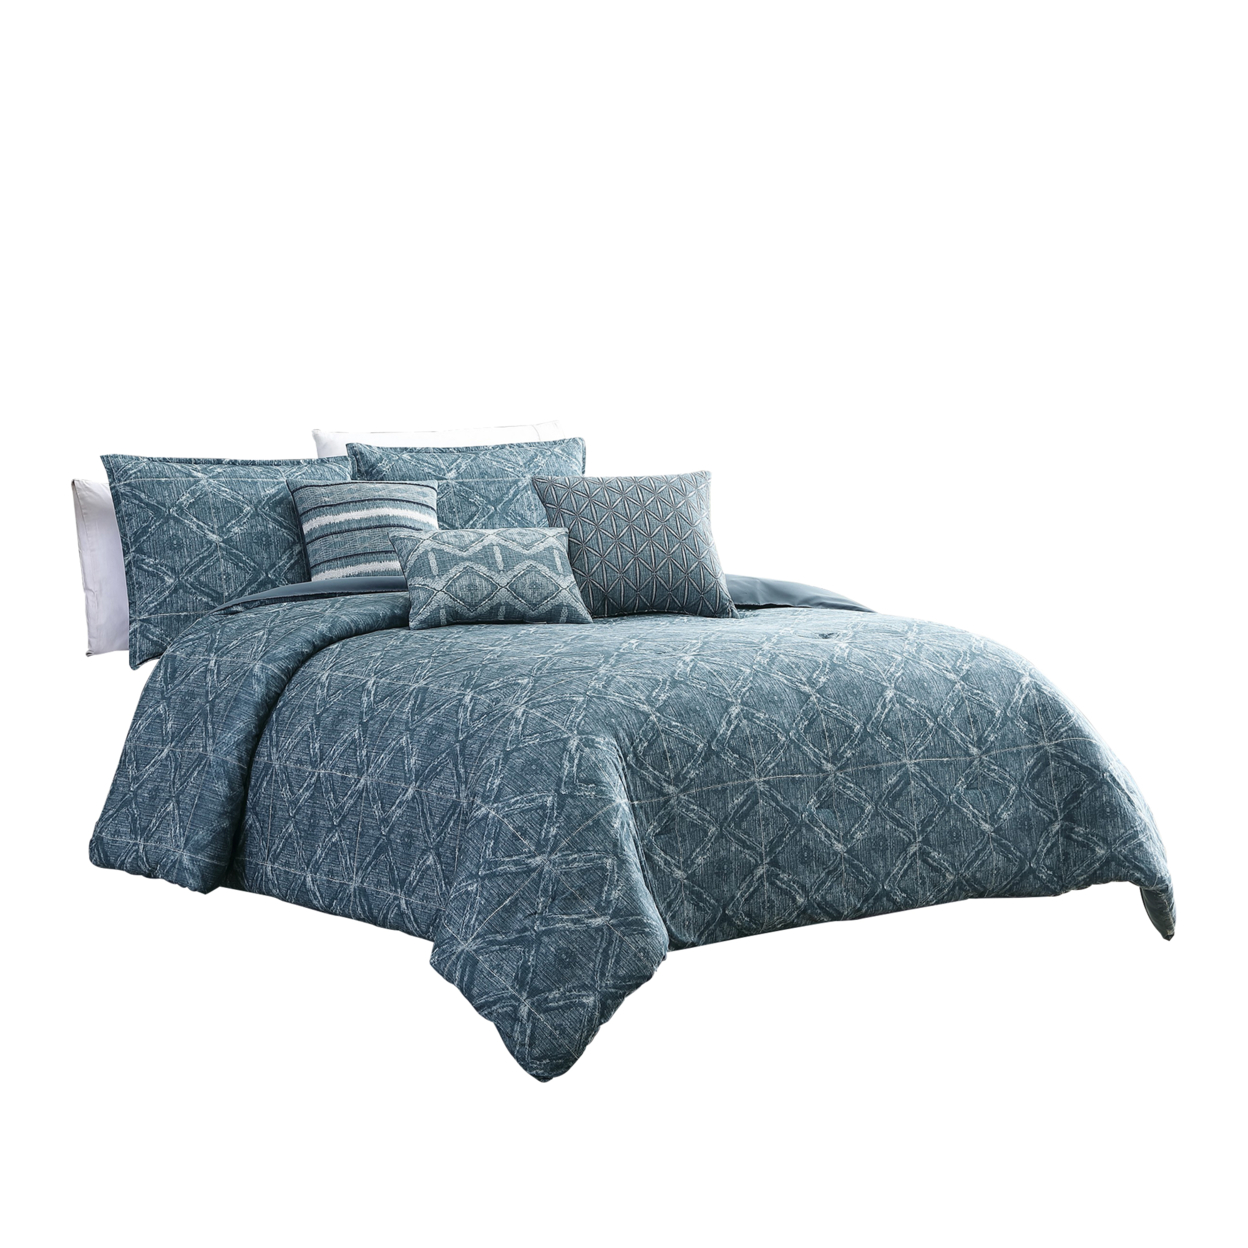 7 Piece King Size Cotton Comforter Set With Geometric Print, Blue- Saltoro Sherpi